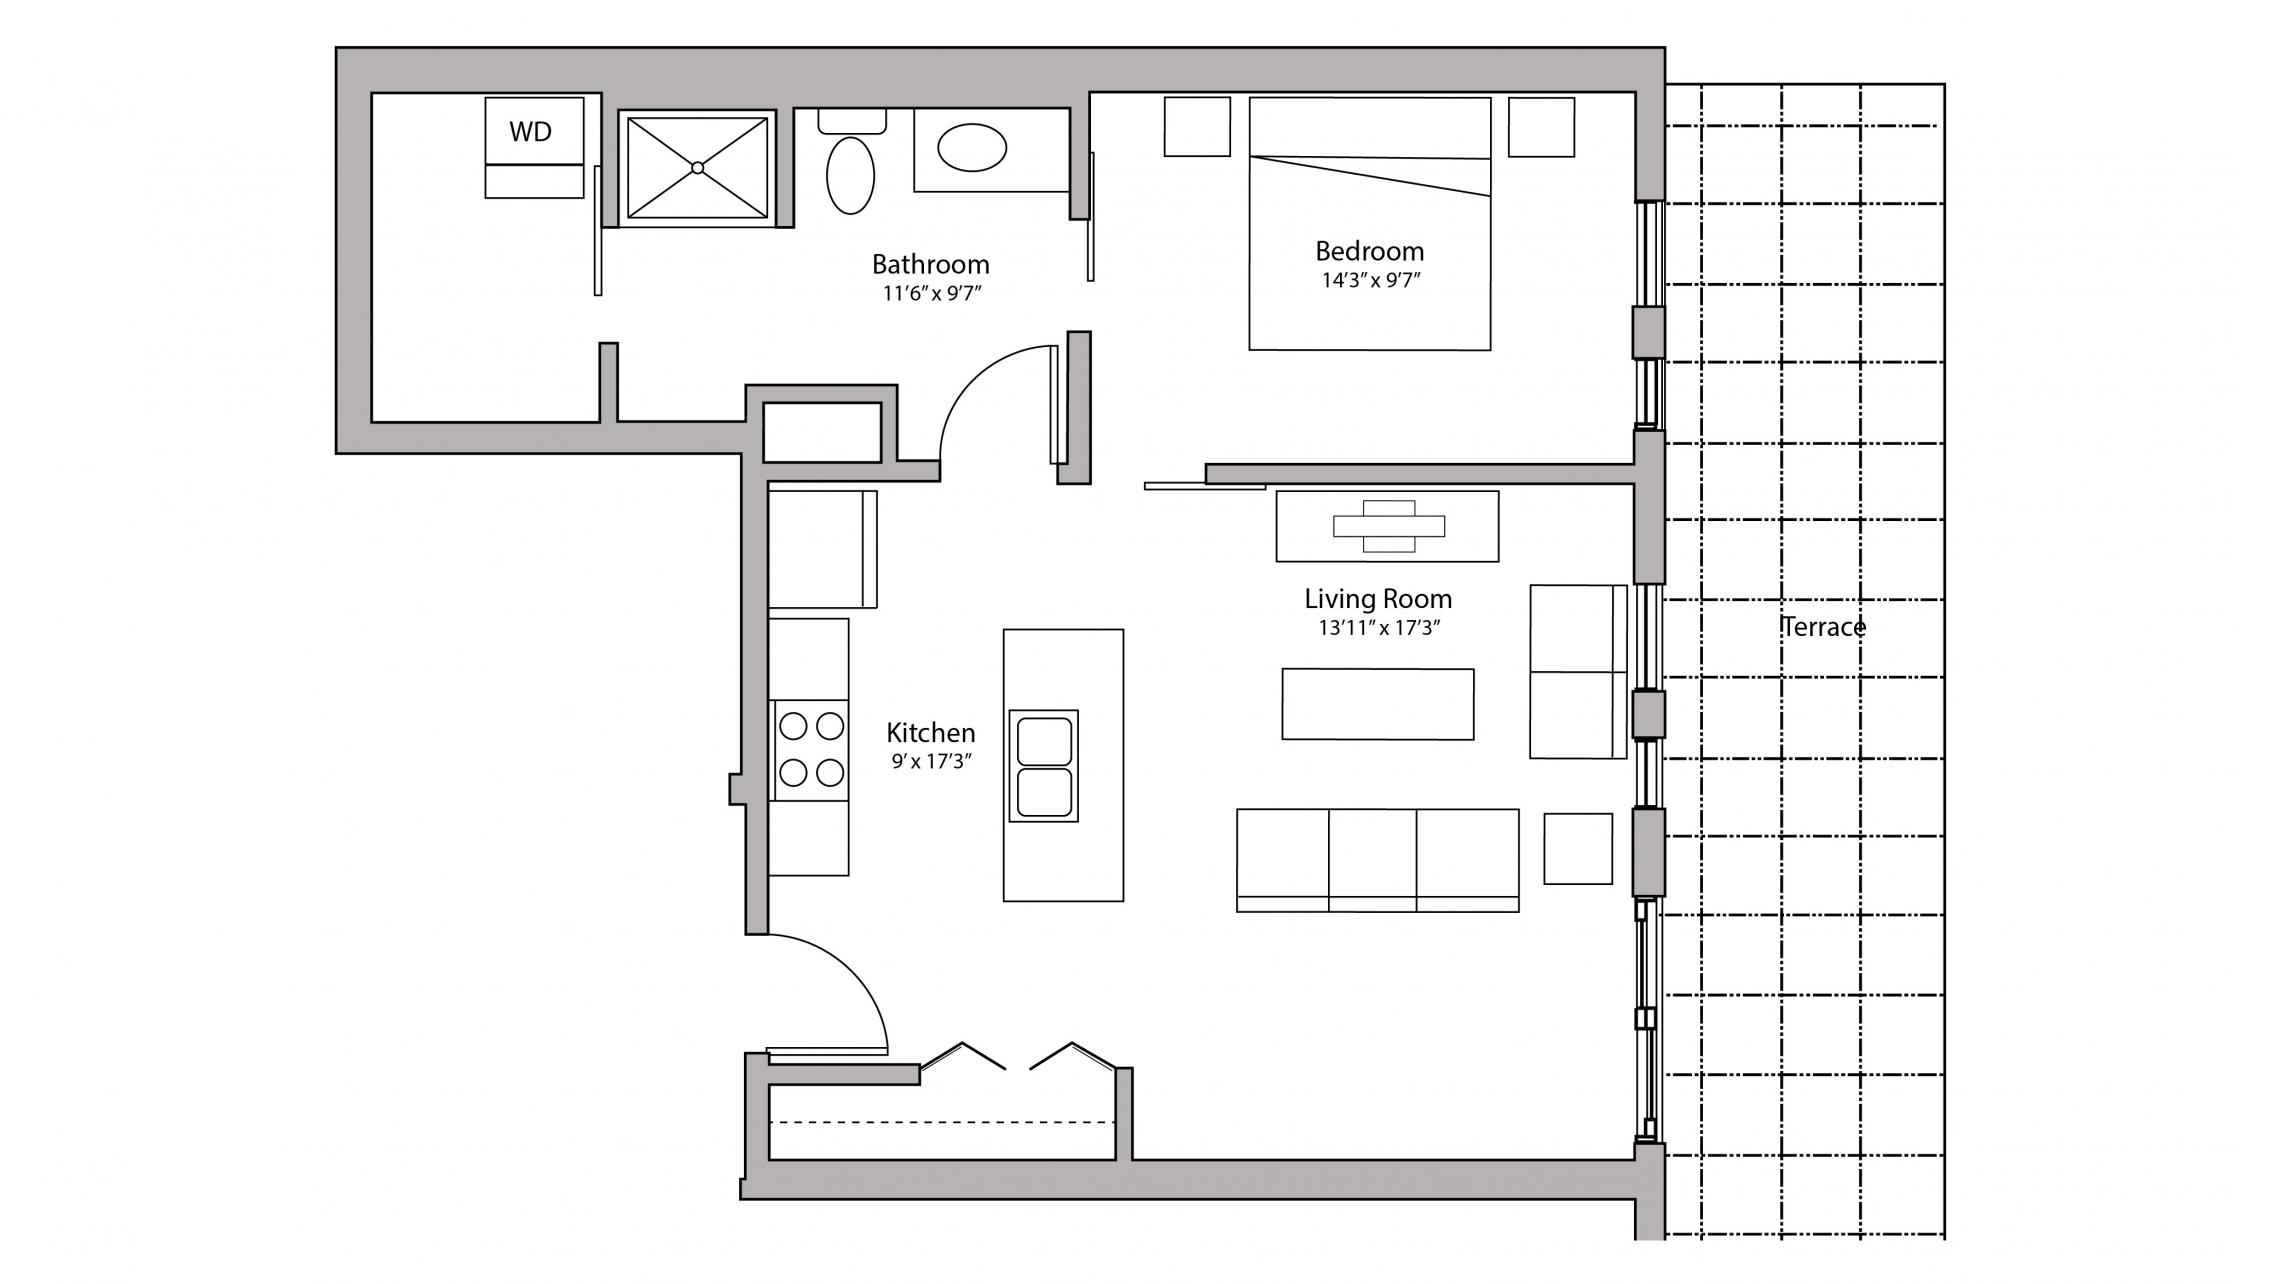 ULI Capitol Hill 500 - One Bedroom, One Bathroom Floorplan